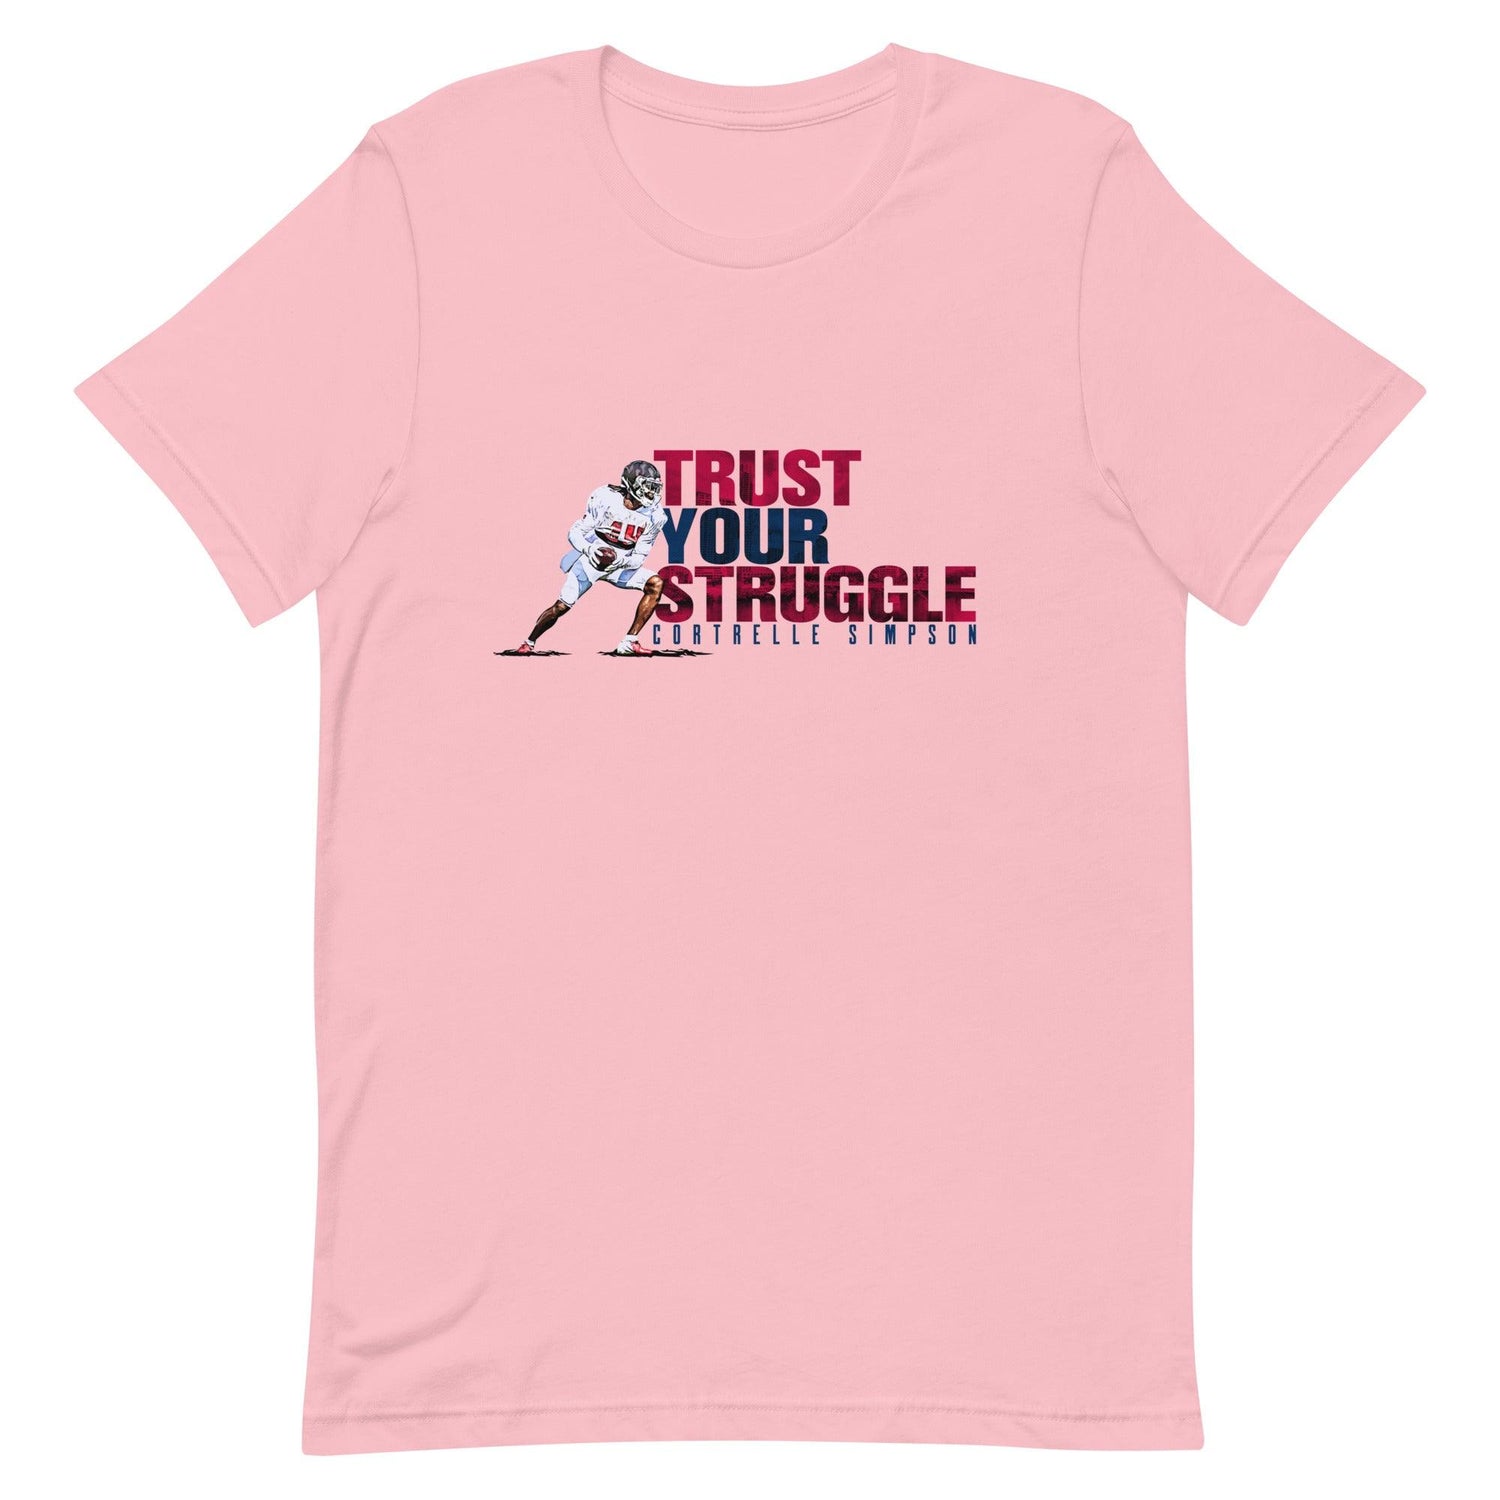 Cortrelle Simpson "Trust Your Struggle" t-shirt - Fan Arch